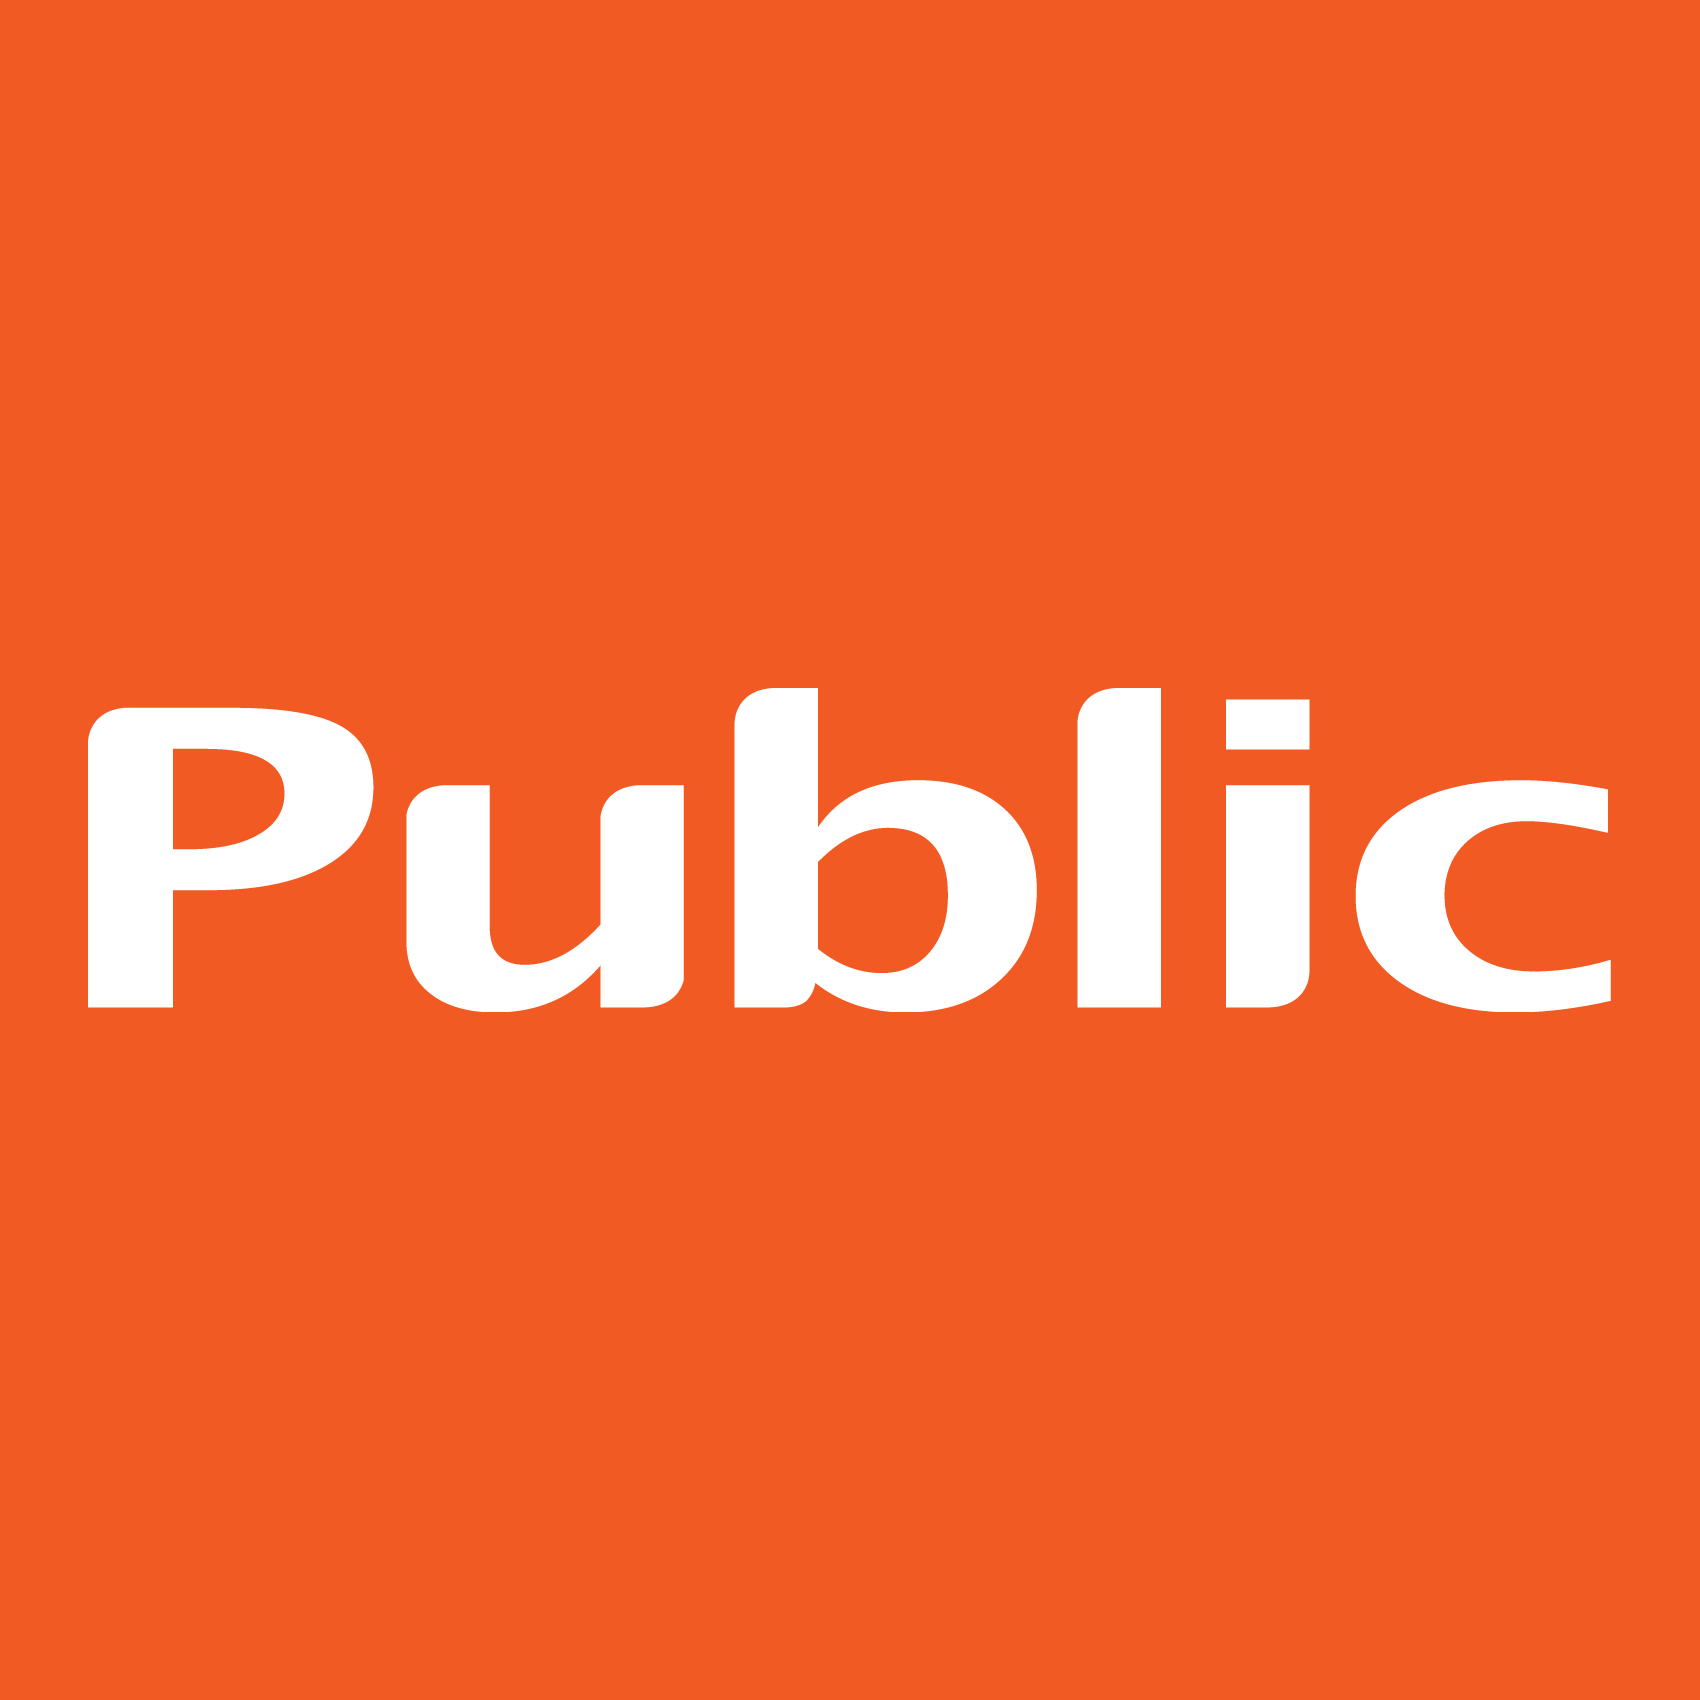 Public Logo - public logo | FDL Group